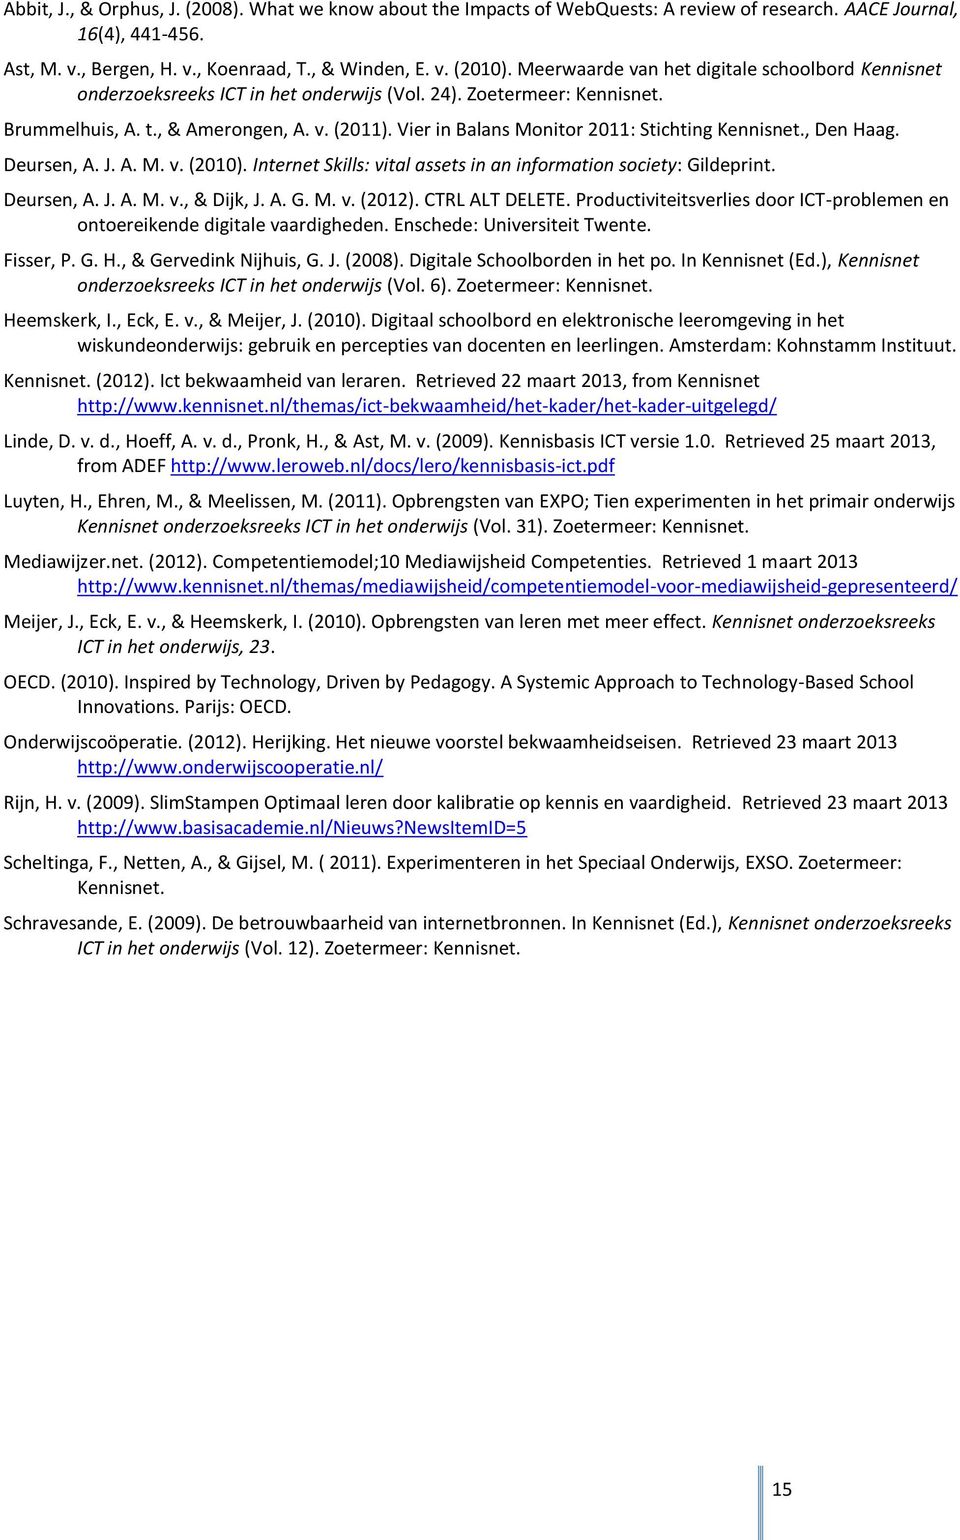 Vier in Balans Monitor 2011: Stichting Kennisnet., Den Haag. Deursen, A. J. A. M. v. (2010). Internet Skills: vital assets in an information society: Gildeprint. Deursen, A. J. A. M. v., & Dijk, J. A. G. M. v. (2012).